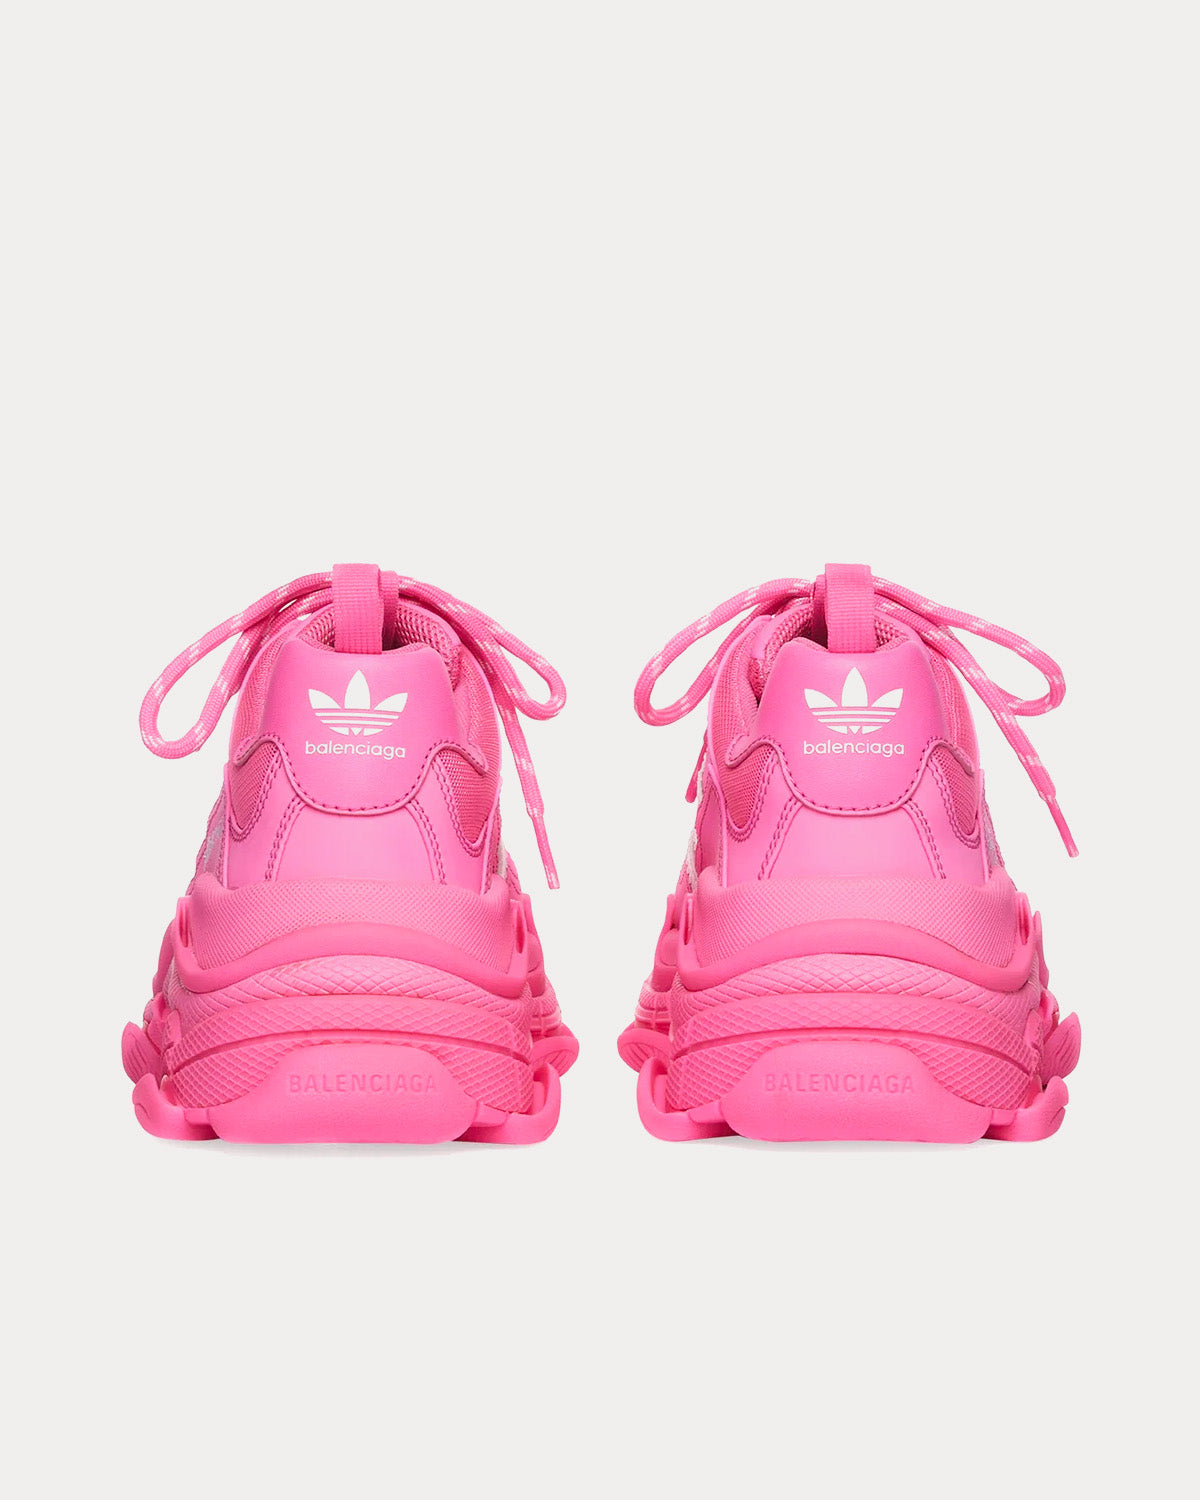 Balenciaga x Adidas - Triple S Pink / White Low Top Sneakers